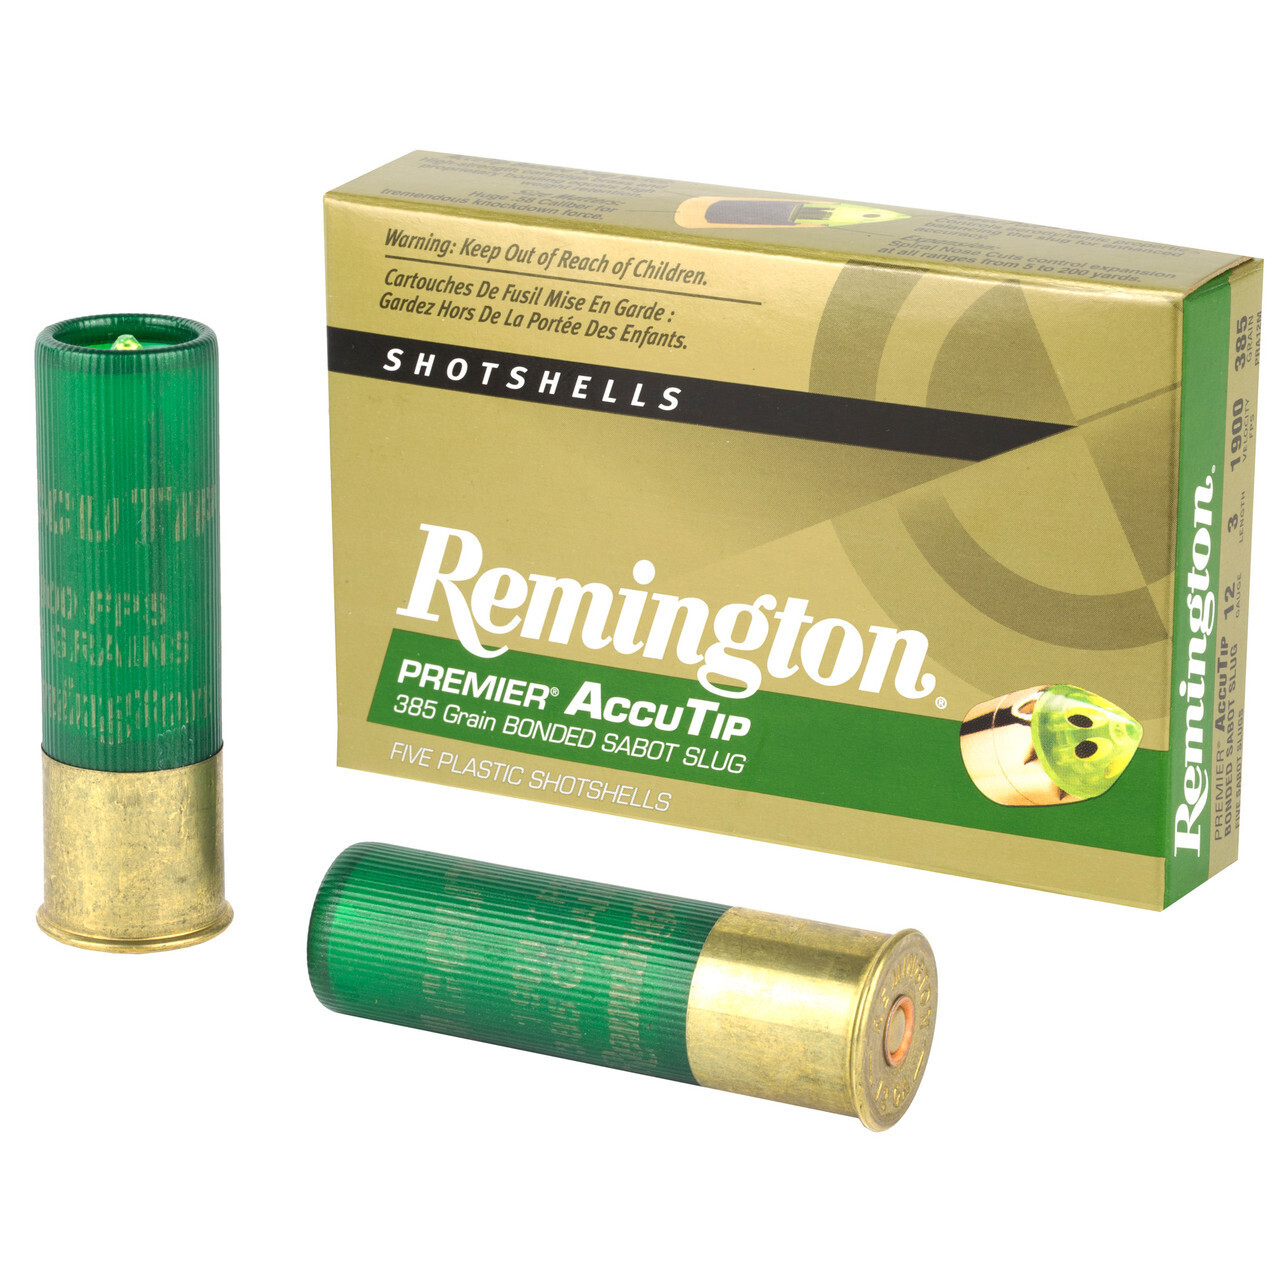 Remington 12GA  3" Accu-tip Sabot Slugs, 385 GR, Box of 5, 20731